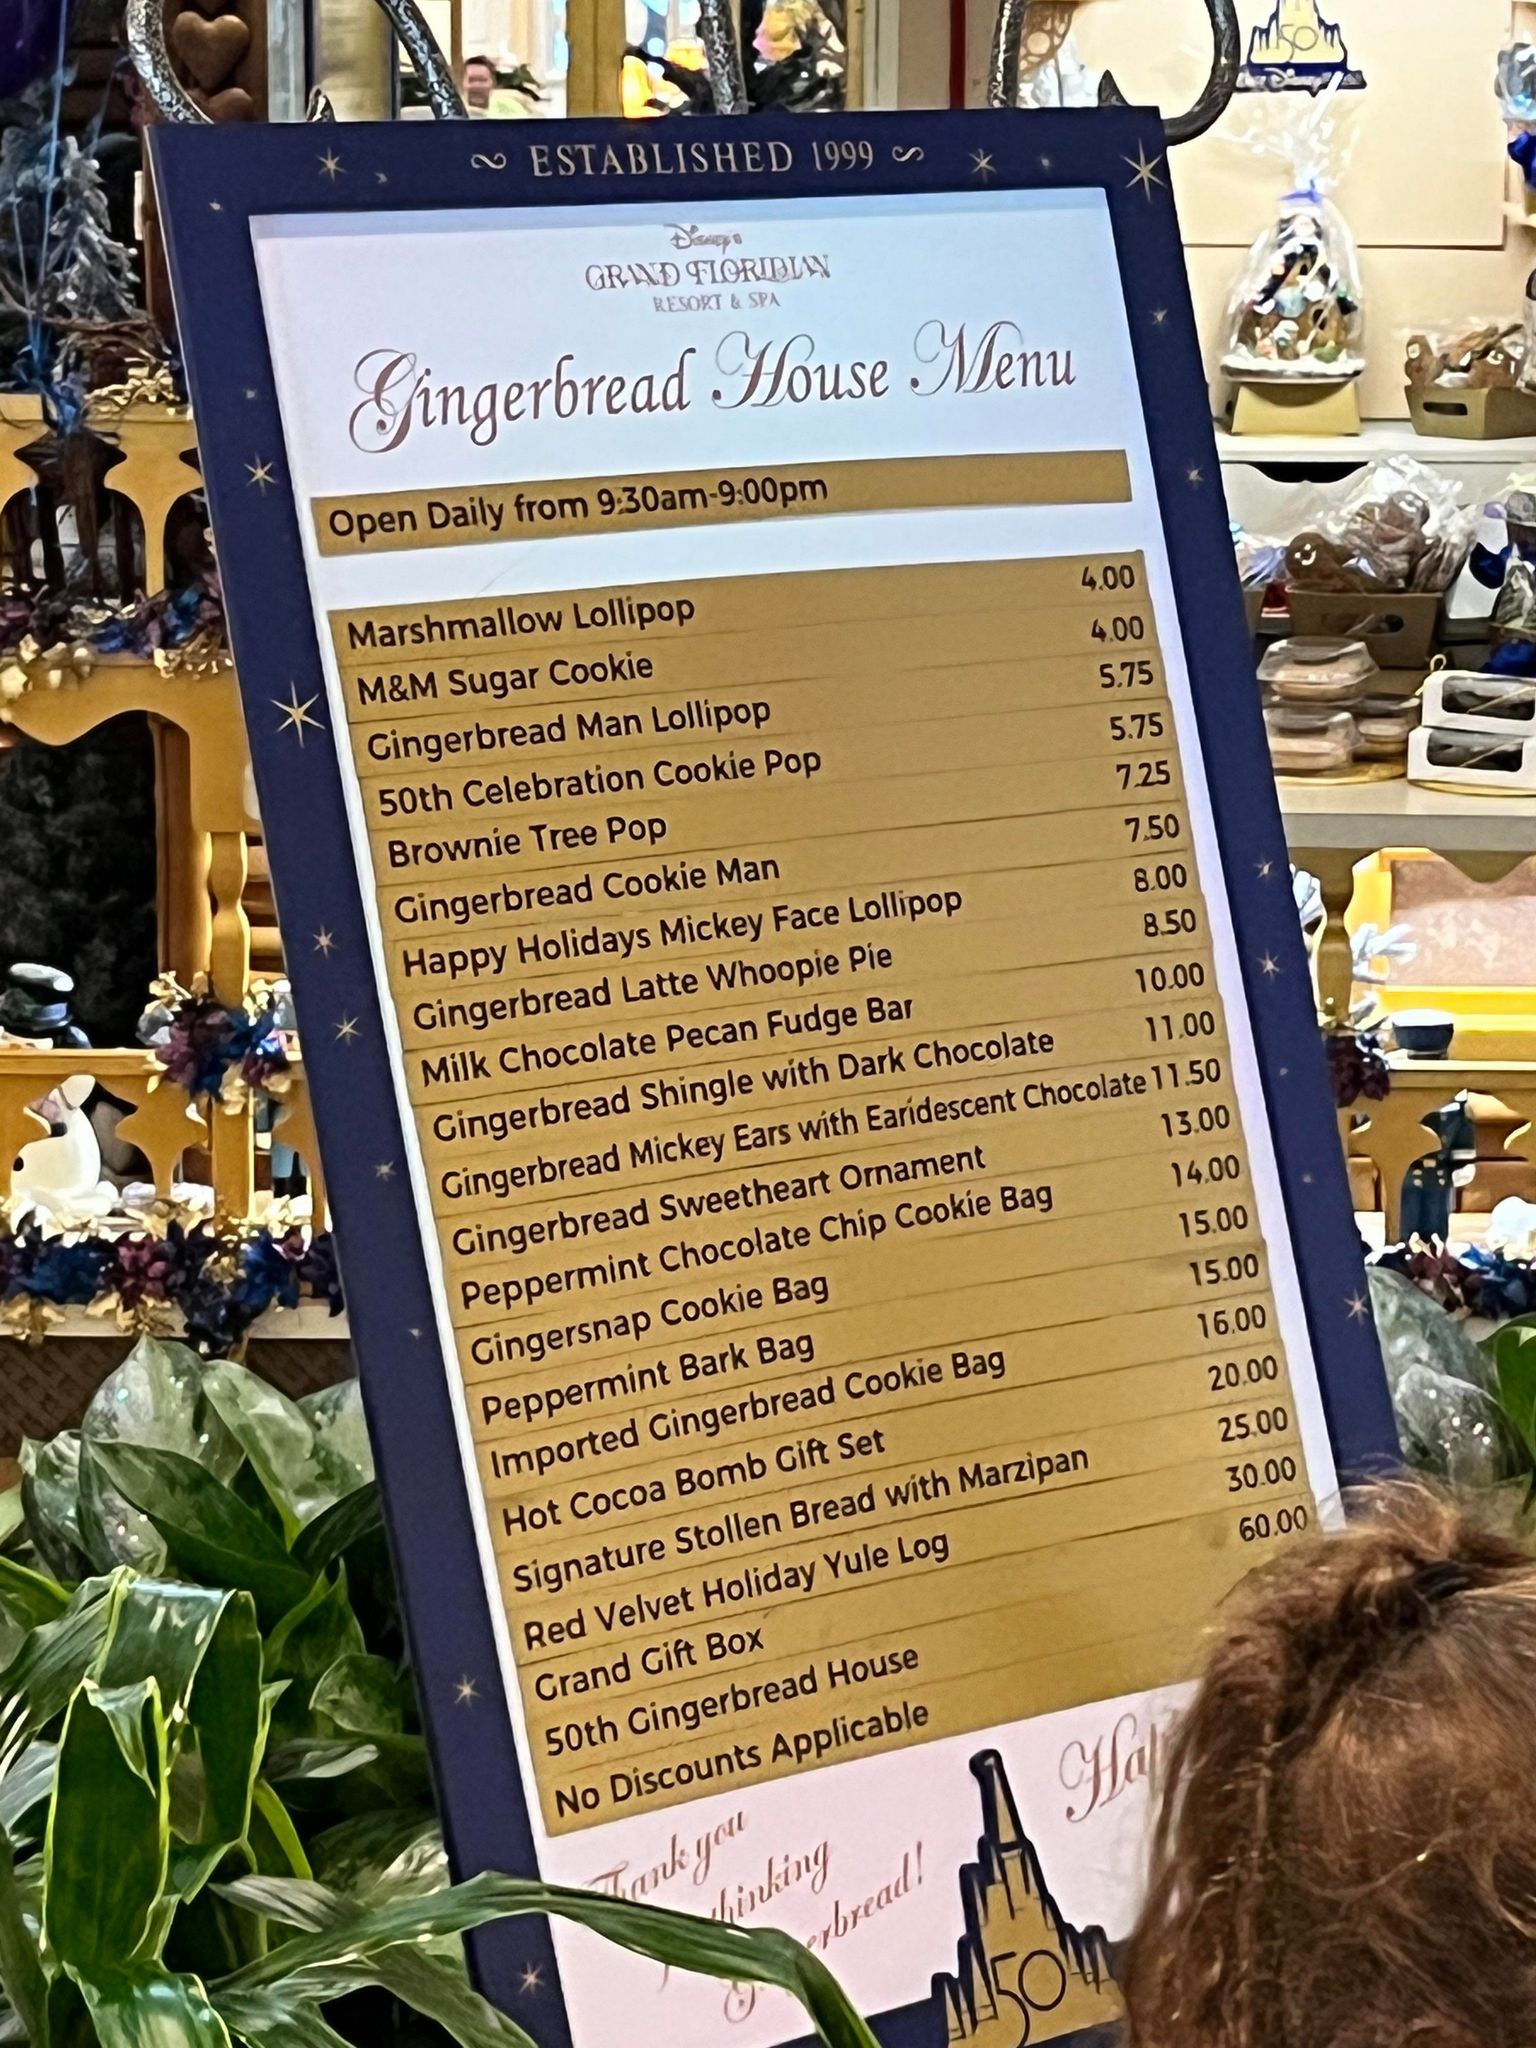 Grand Floridian Gingerbread House menu